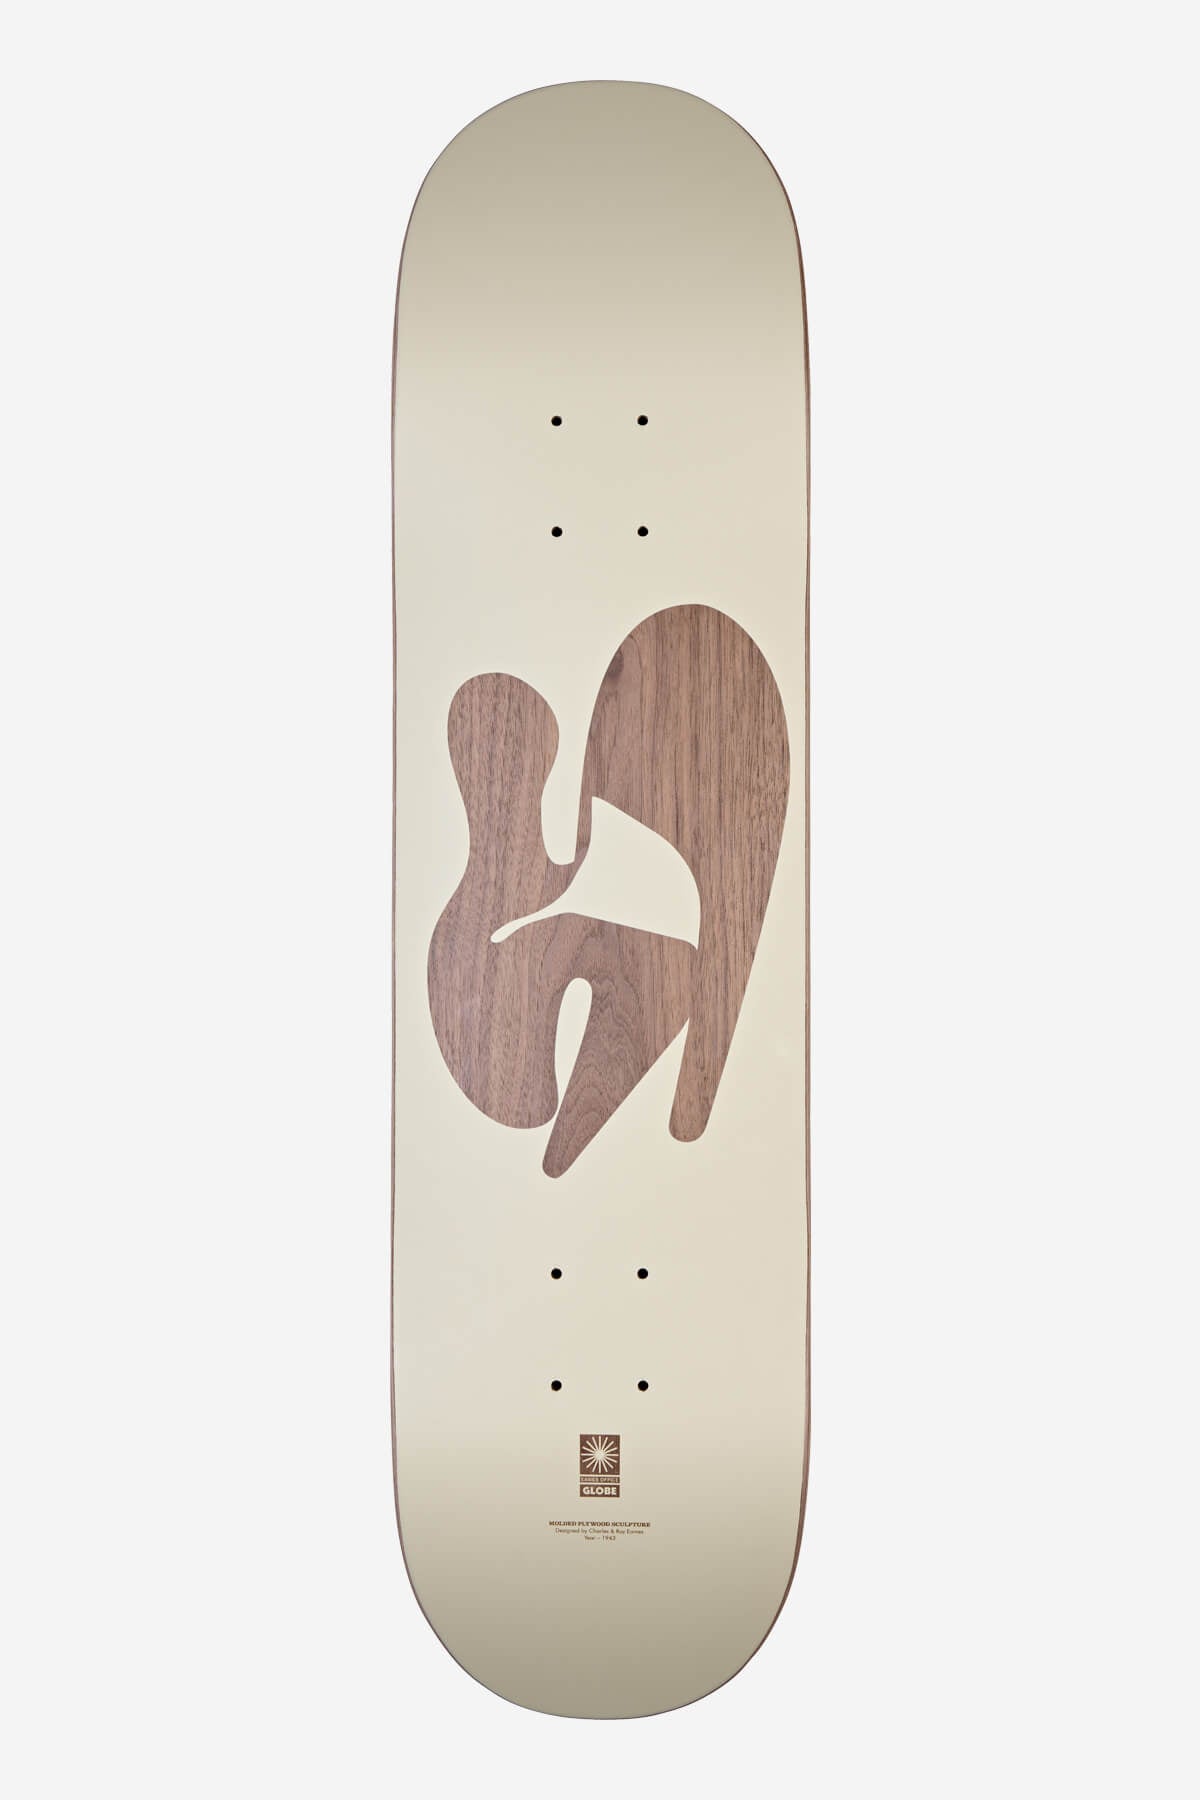 eames silhouette plywood sculpture 8.0" skateboard deck